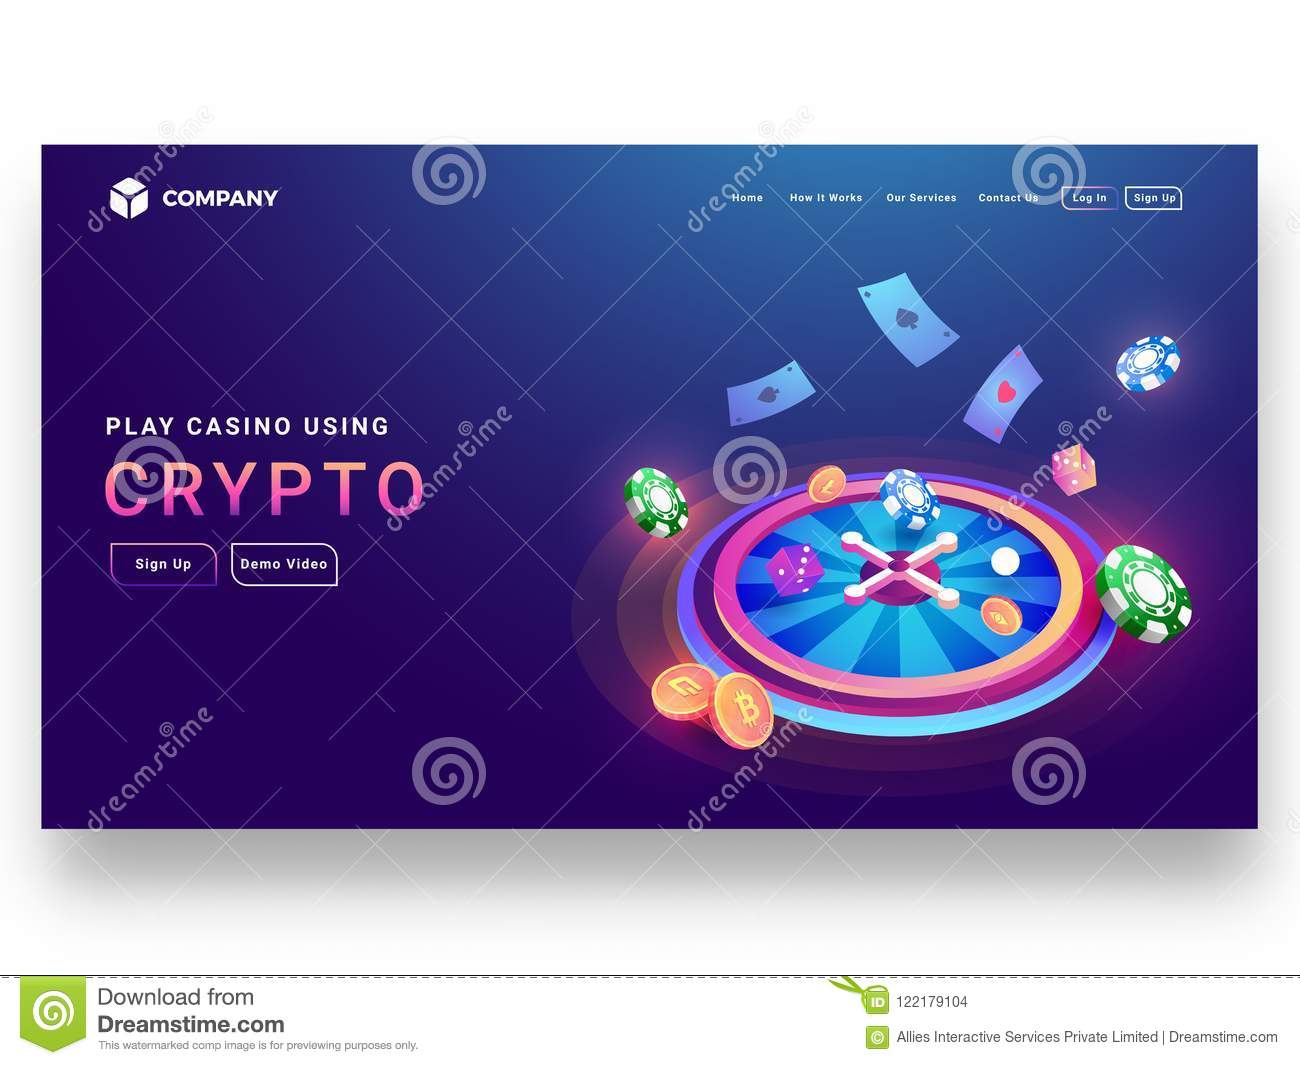 Bitcoin casino online 10 euro bonus